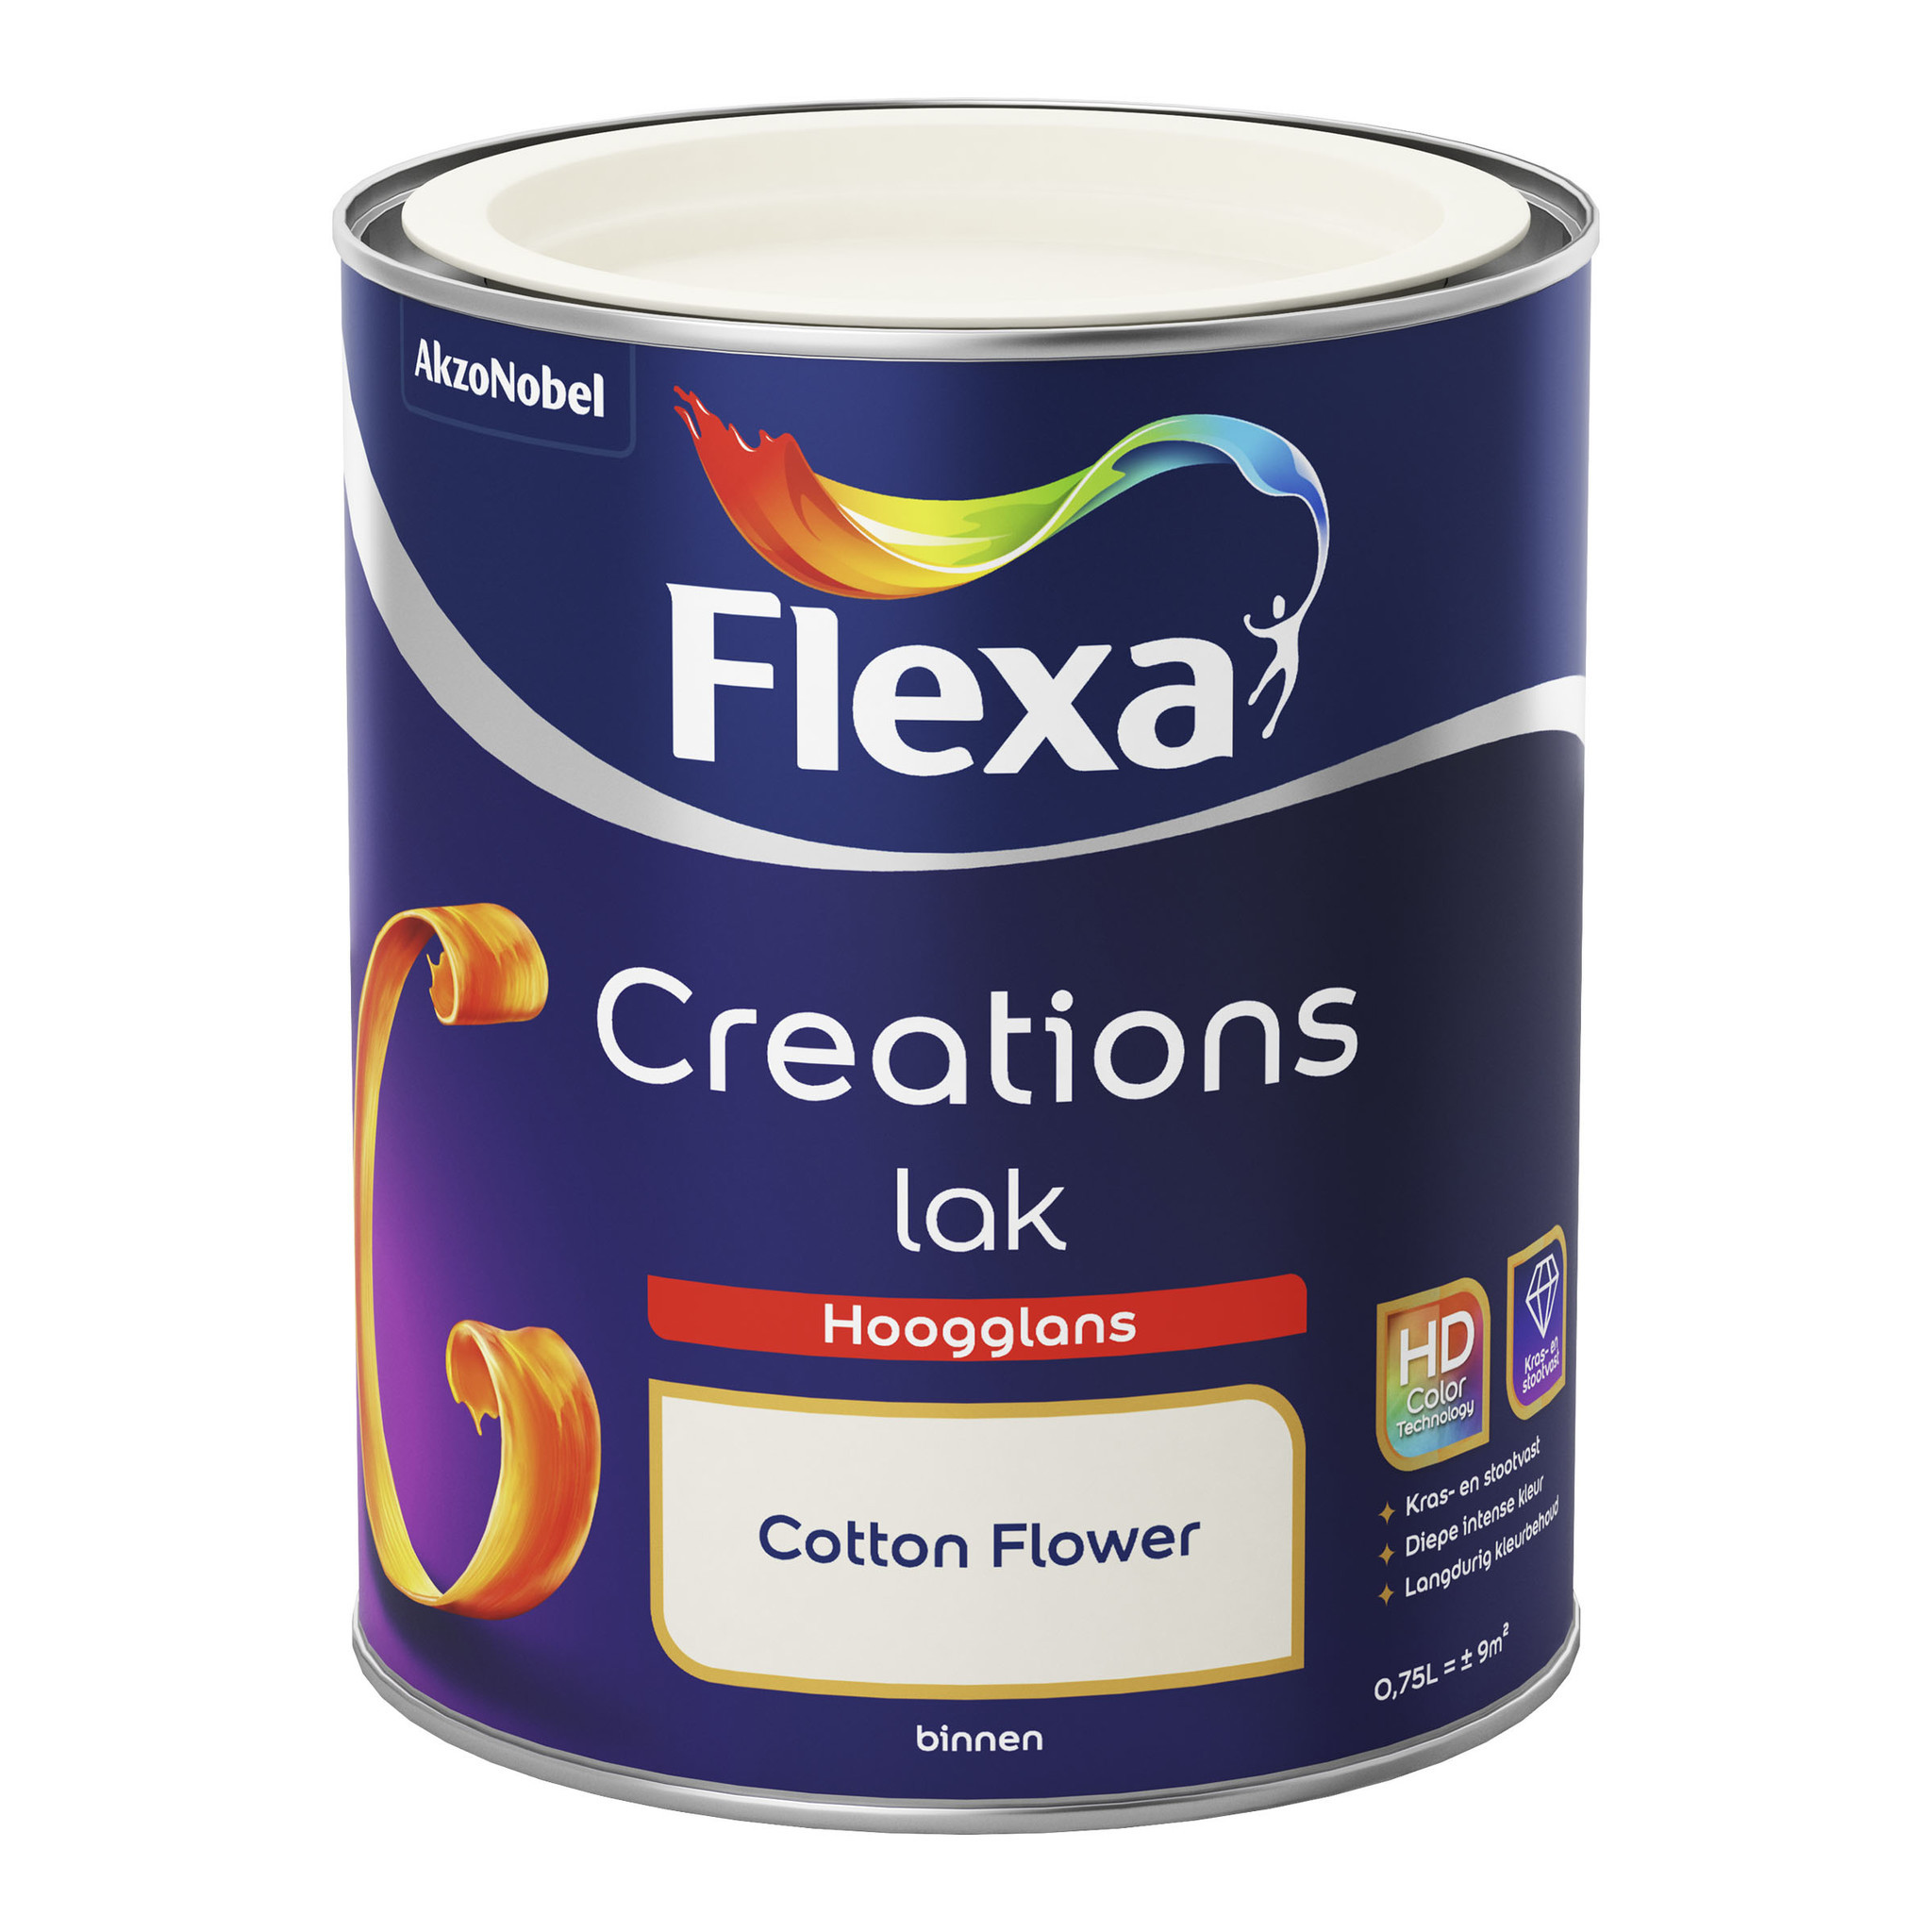 Flexa Creations Lak Hoogglans - Cotton Flower